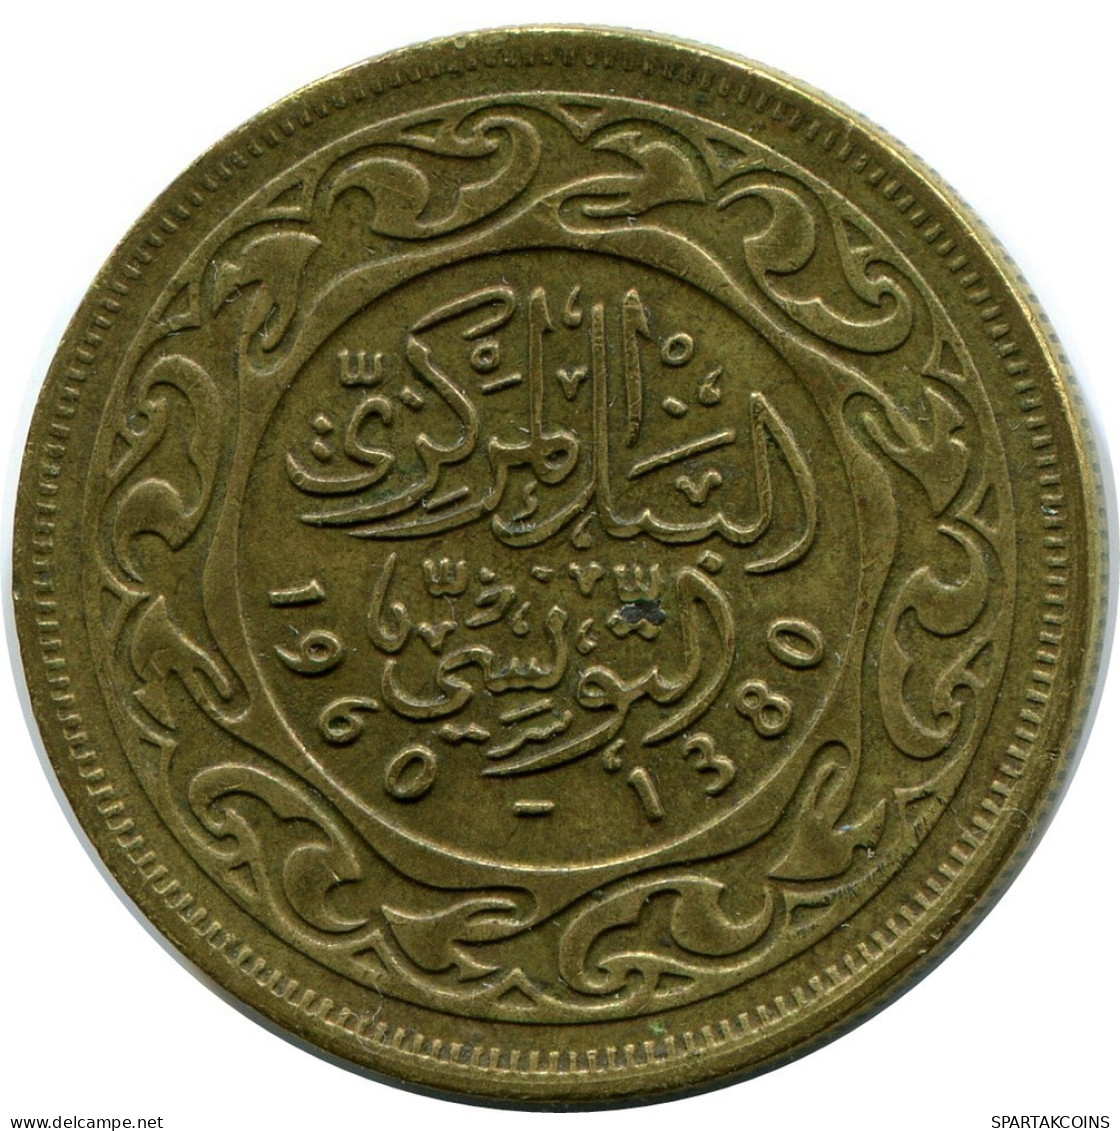 50 MILLIMES 1960 TÚNEZ TUNISIA Moneda #AR042.E.A - Túnez